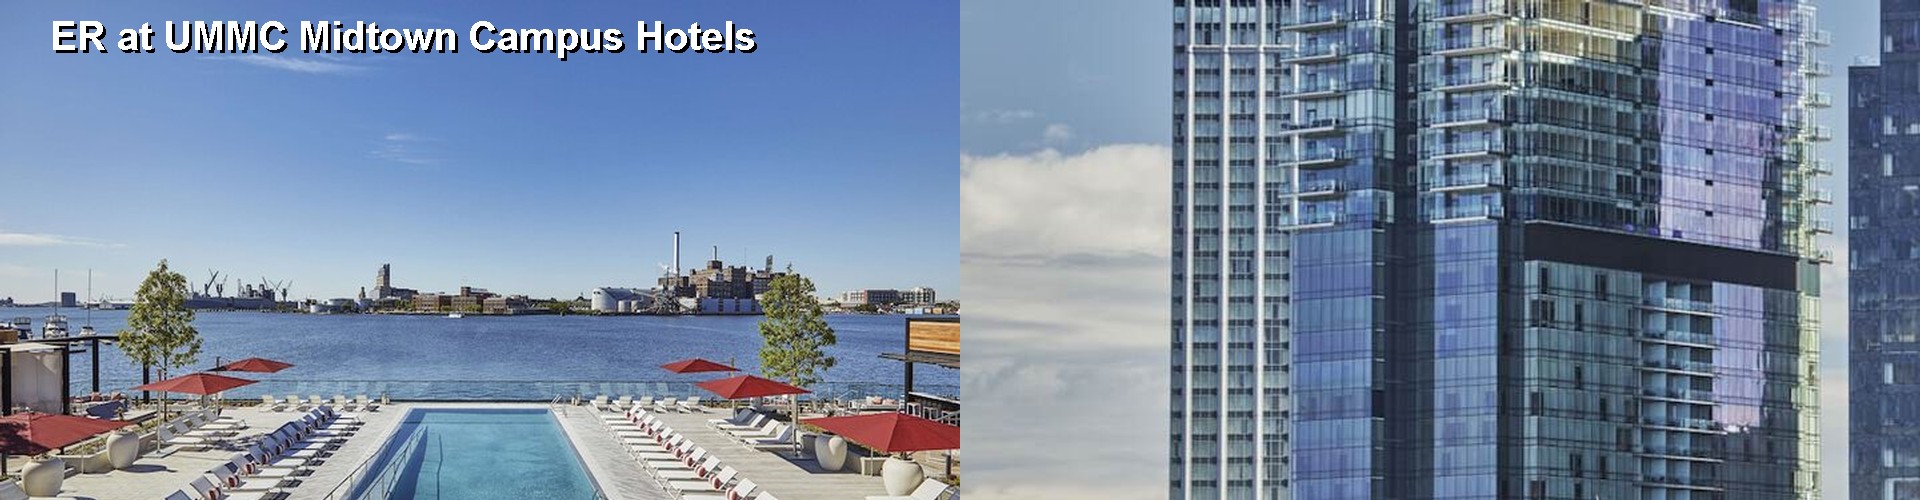 4 Best Hotels near ER at UMMC Midtown Campus